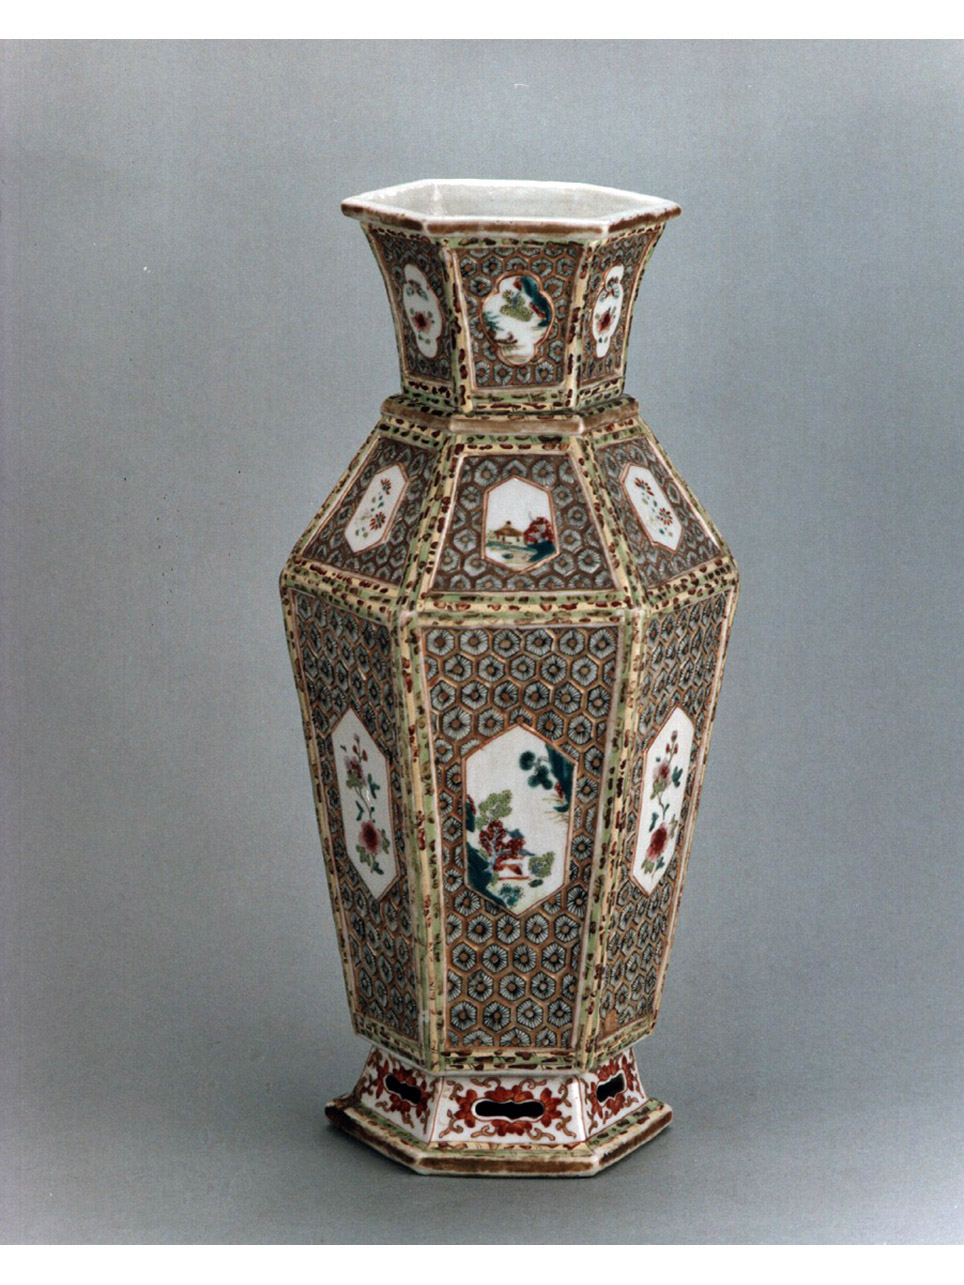 motivi decorativi geometrici e vegetali (vaso) - manifattura cinese (sec. XVIII)